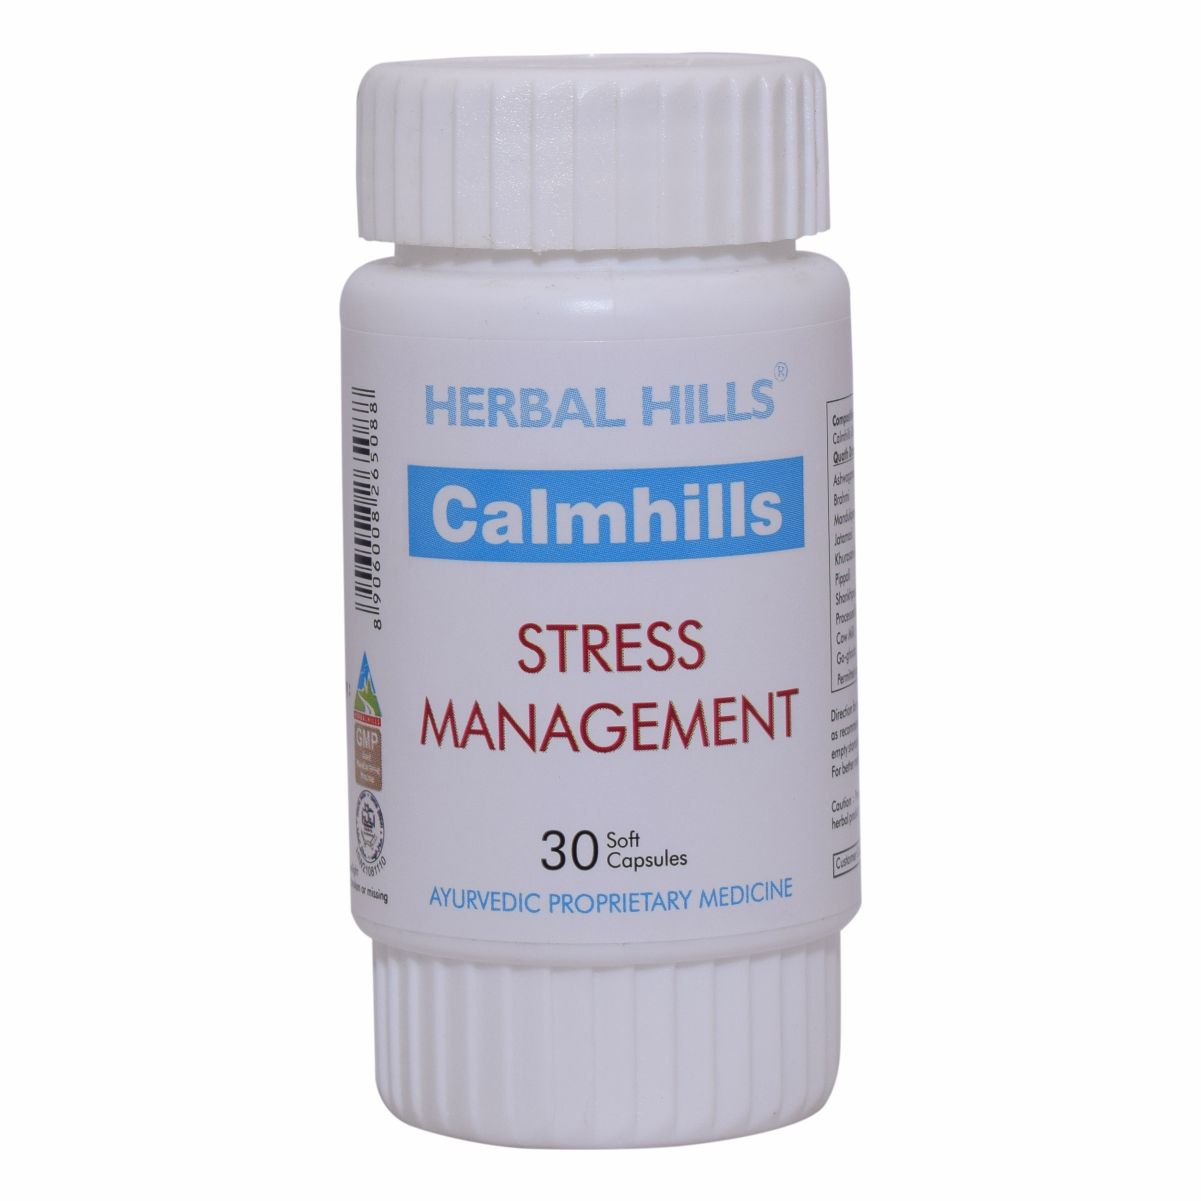 Buy Herbal Hills Calmhills at Best Price Online